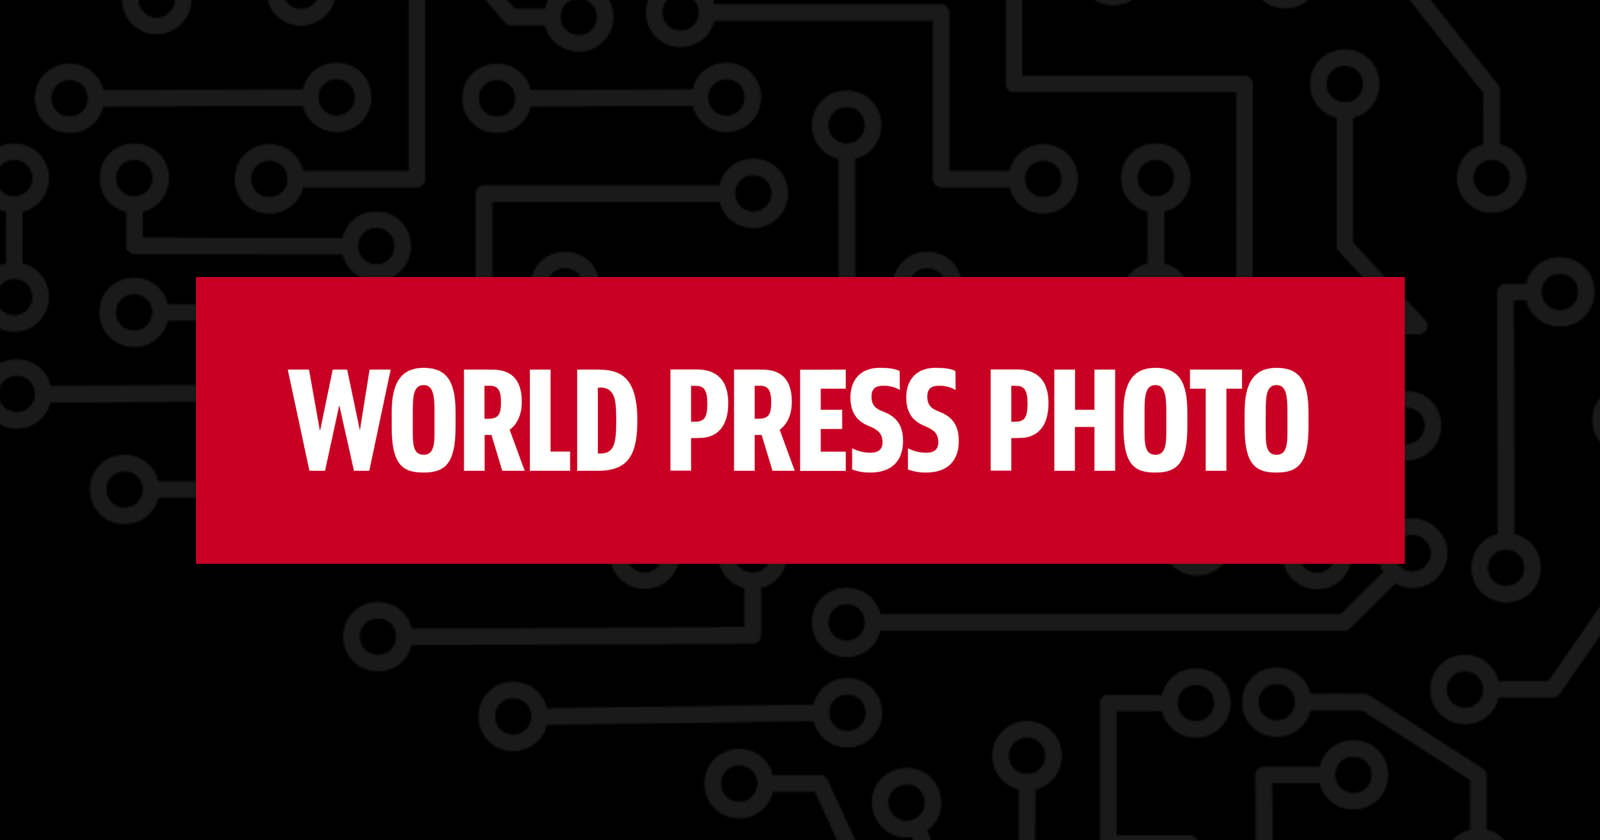 World Press Photo Contest Backtracks on AI After Photographer Backlash